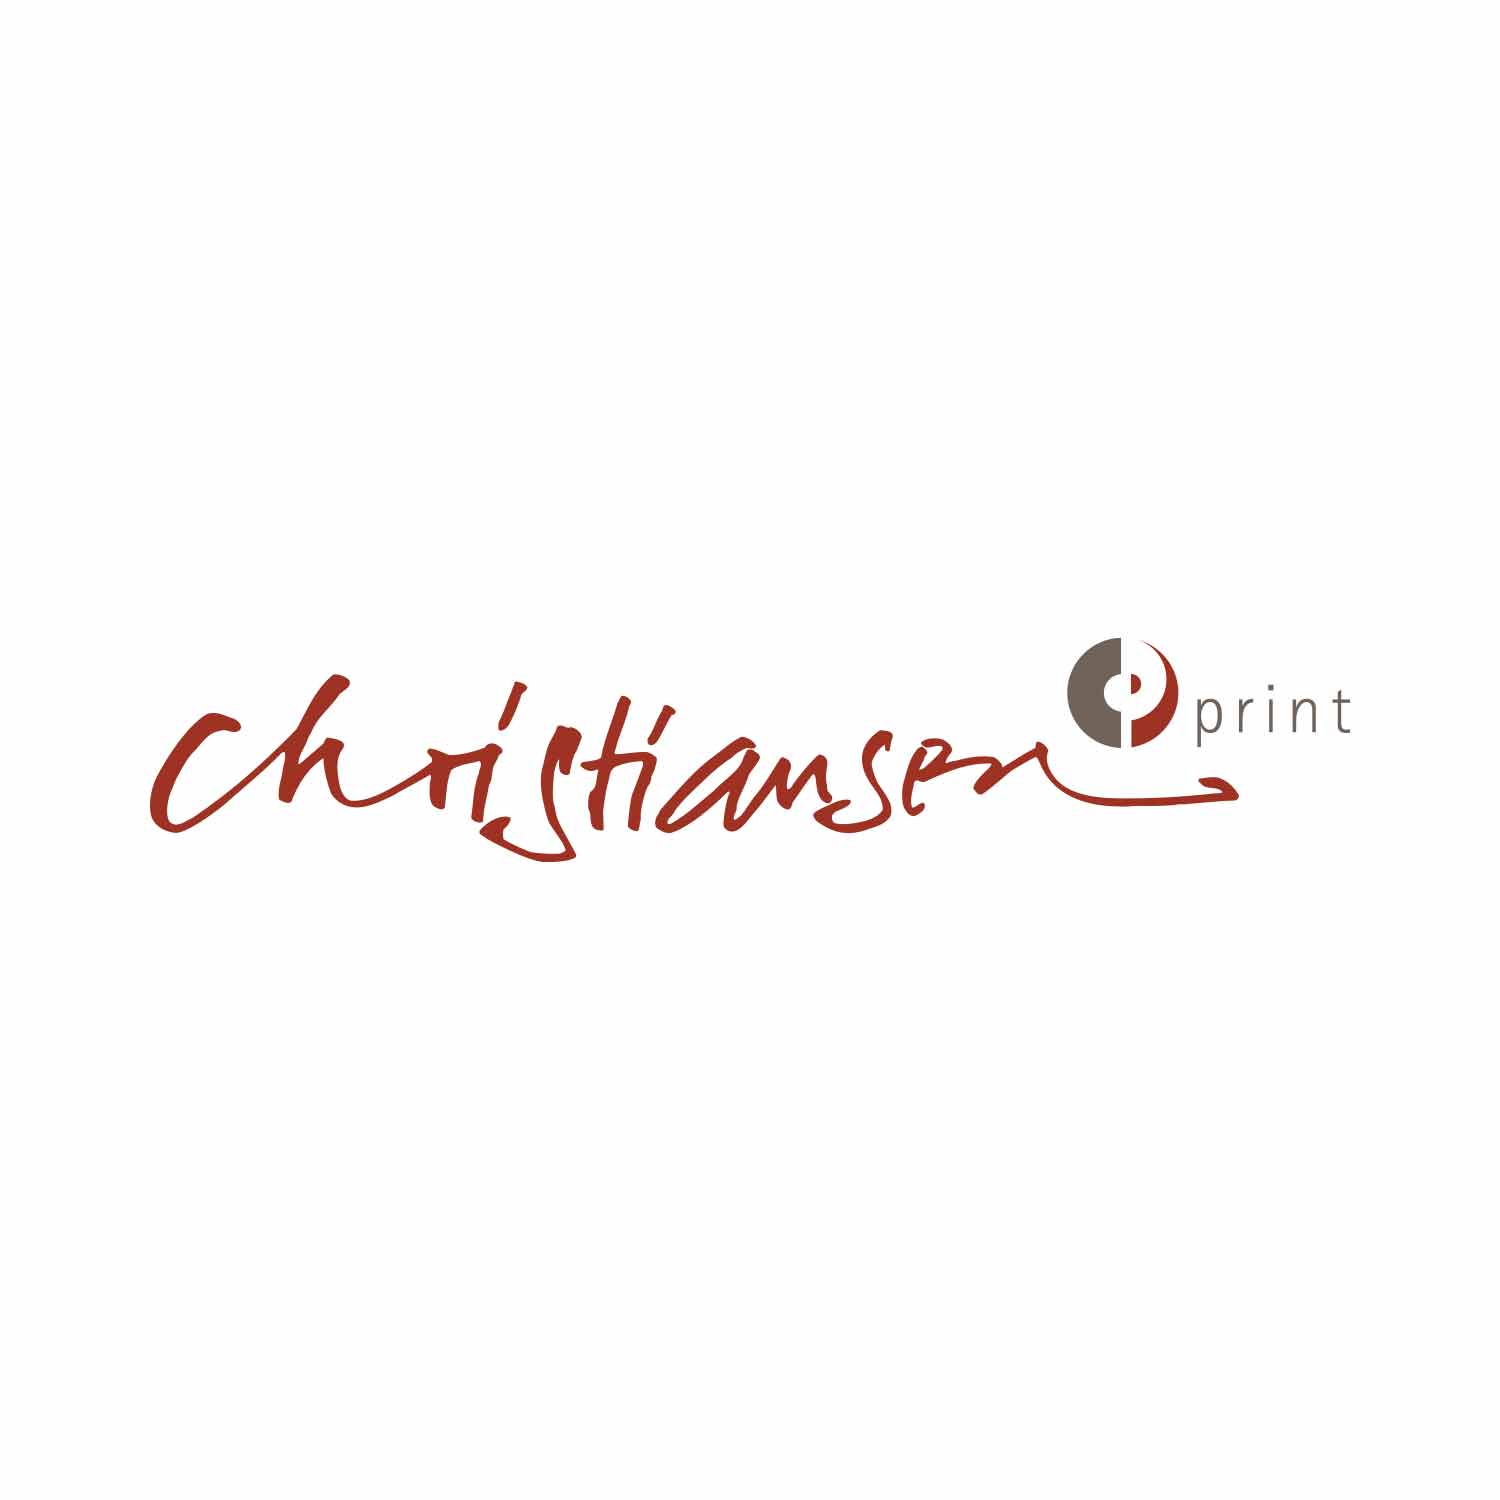 Christiansen Print logo